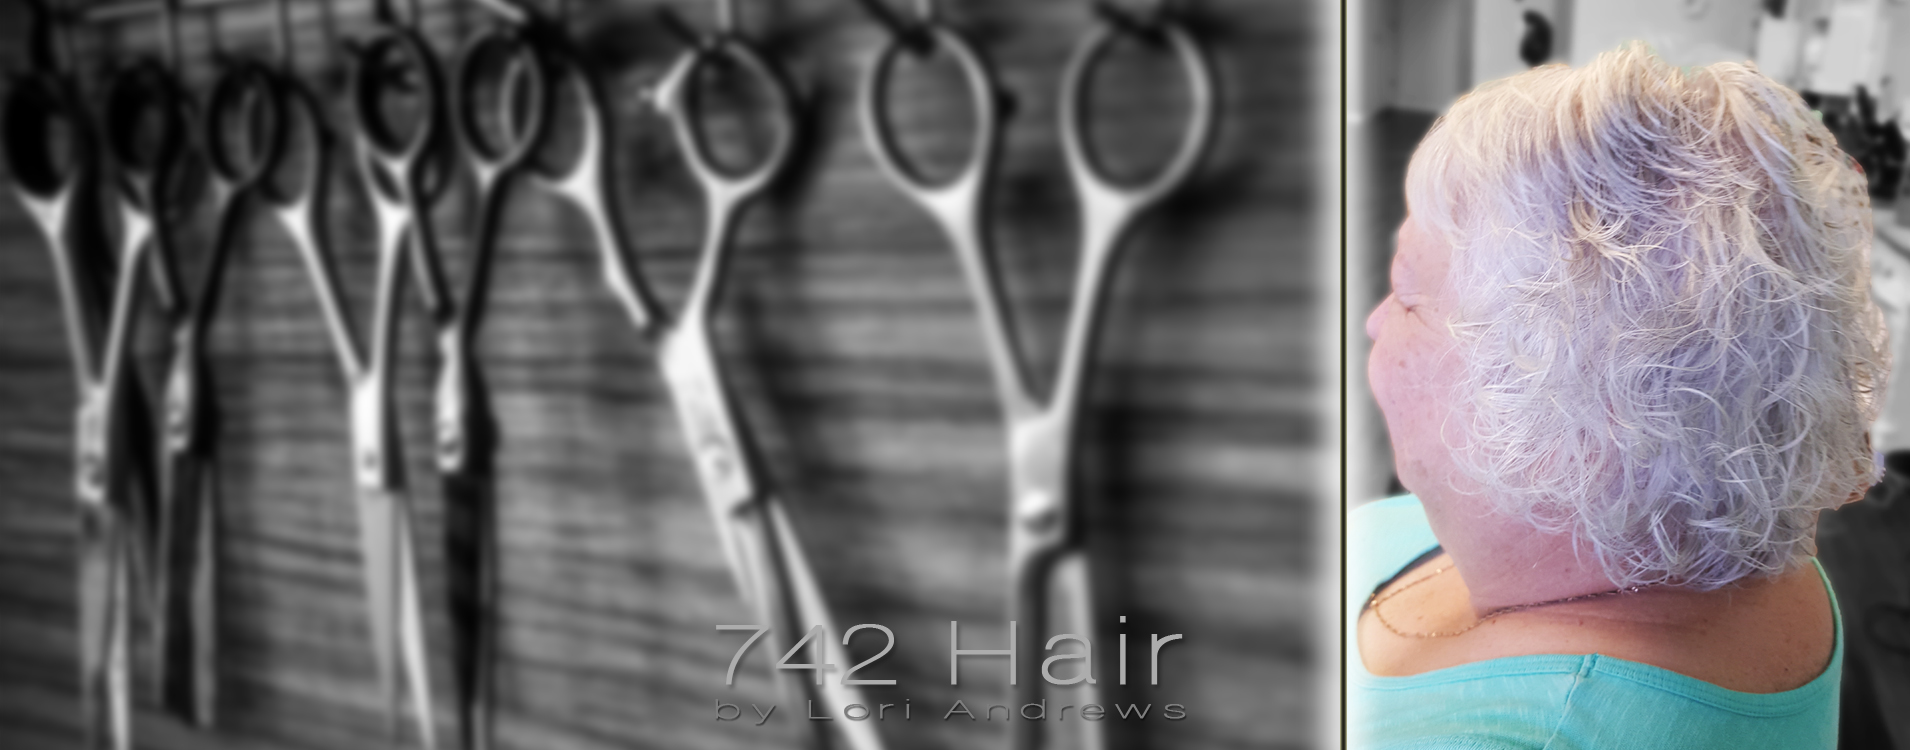 742 Hair - by Lori Andrews | Hair Salon in Pinellas Park, St Pete,  Clearwater FL